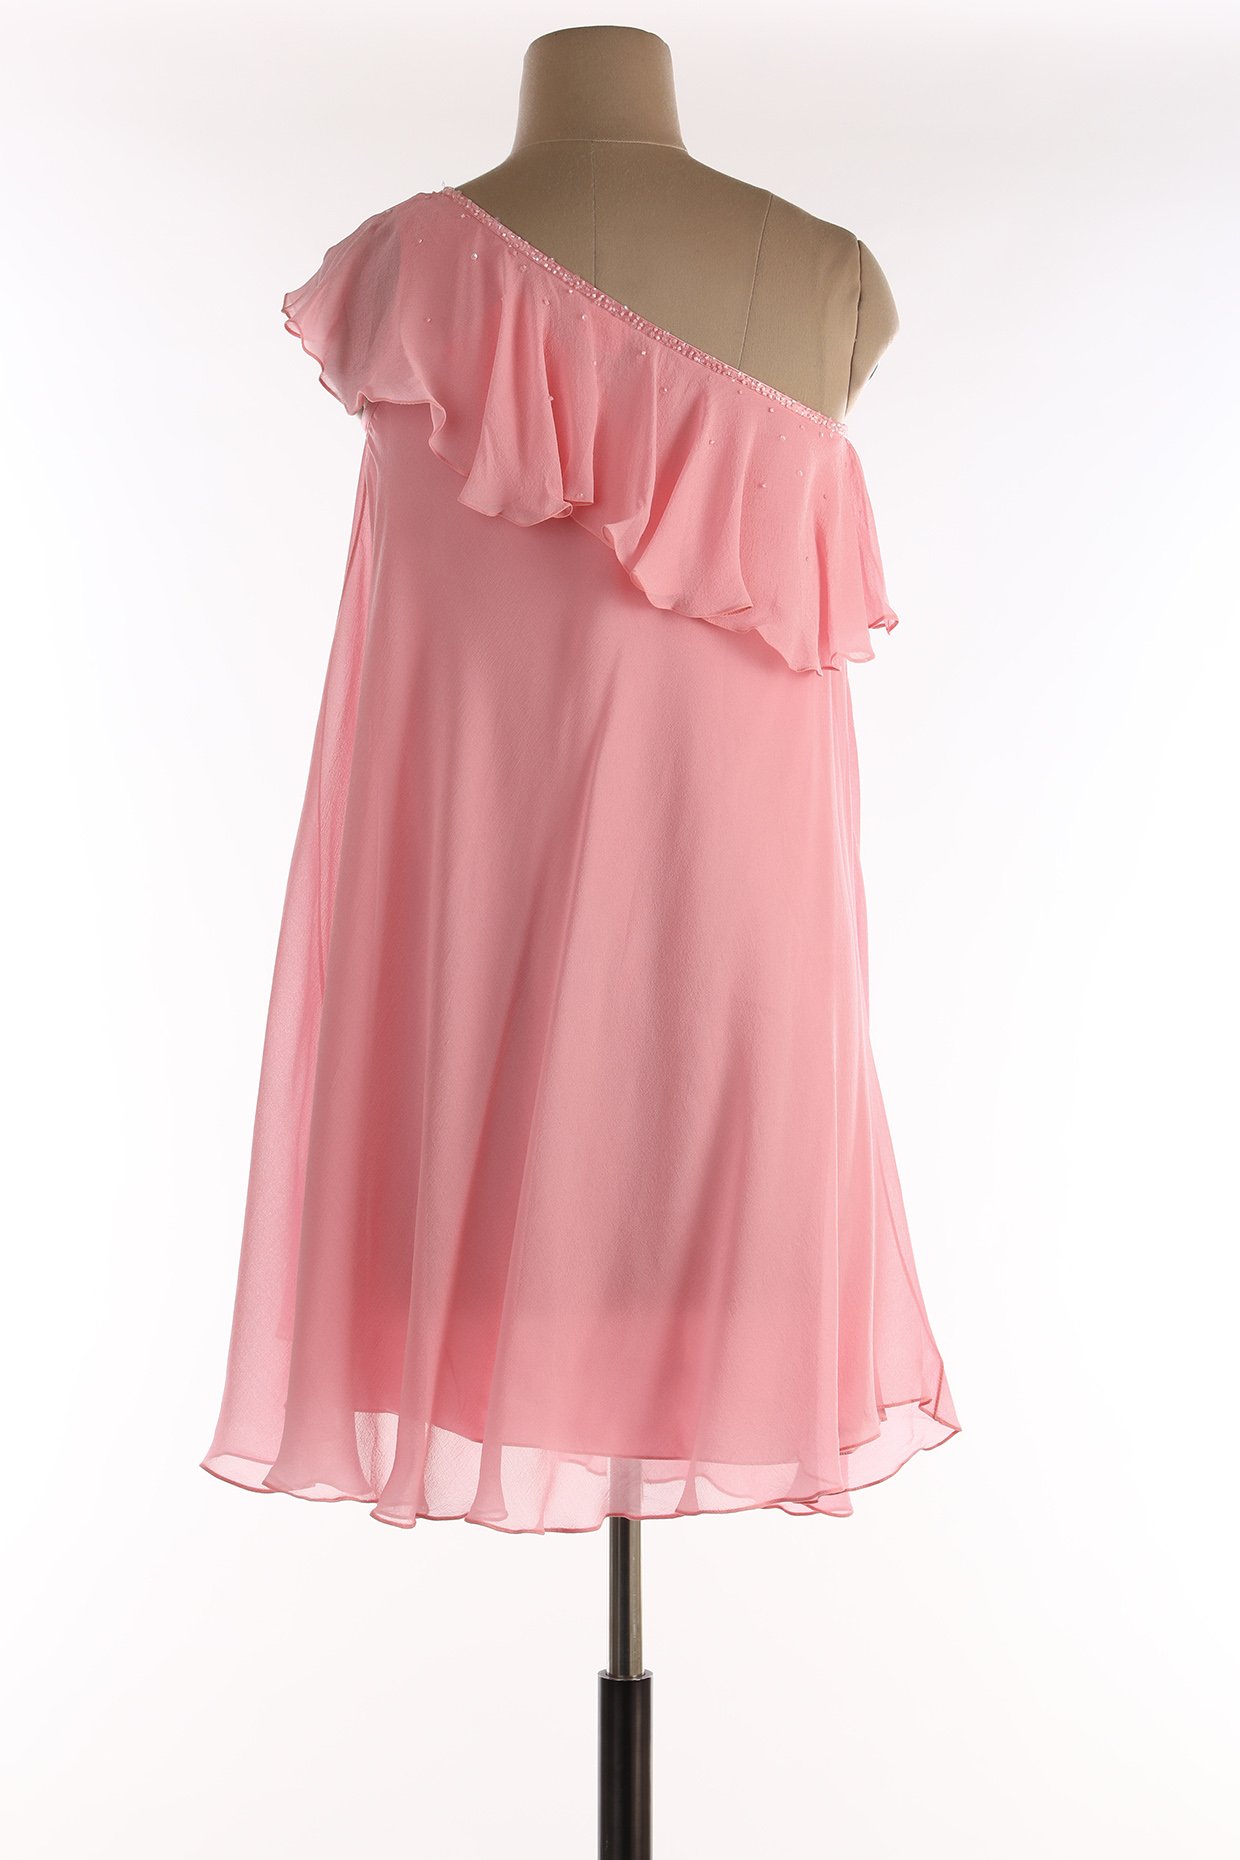 Janie Convertible Junior Bridesmaid Dress in Blush Pink | Birdy Grey